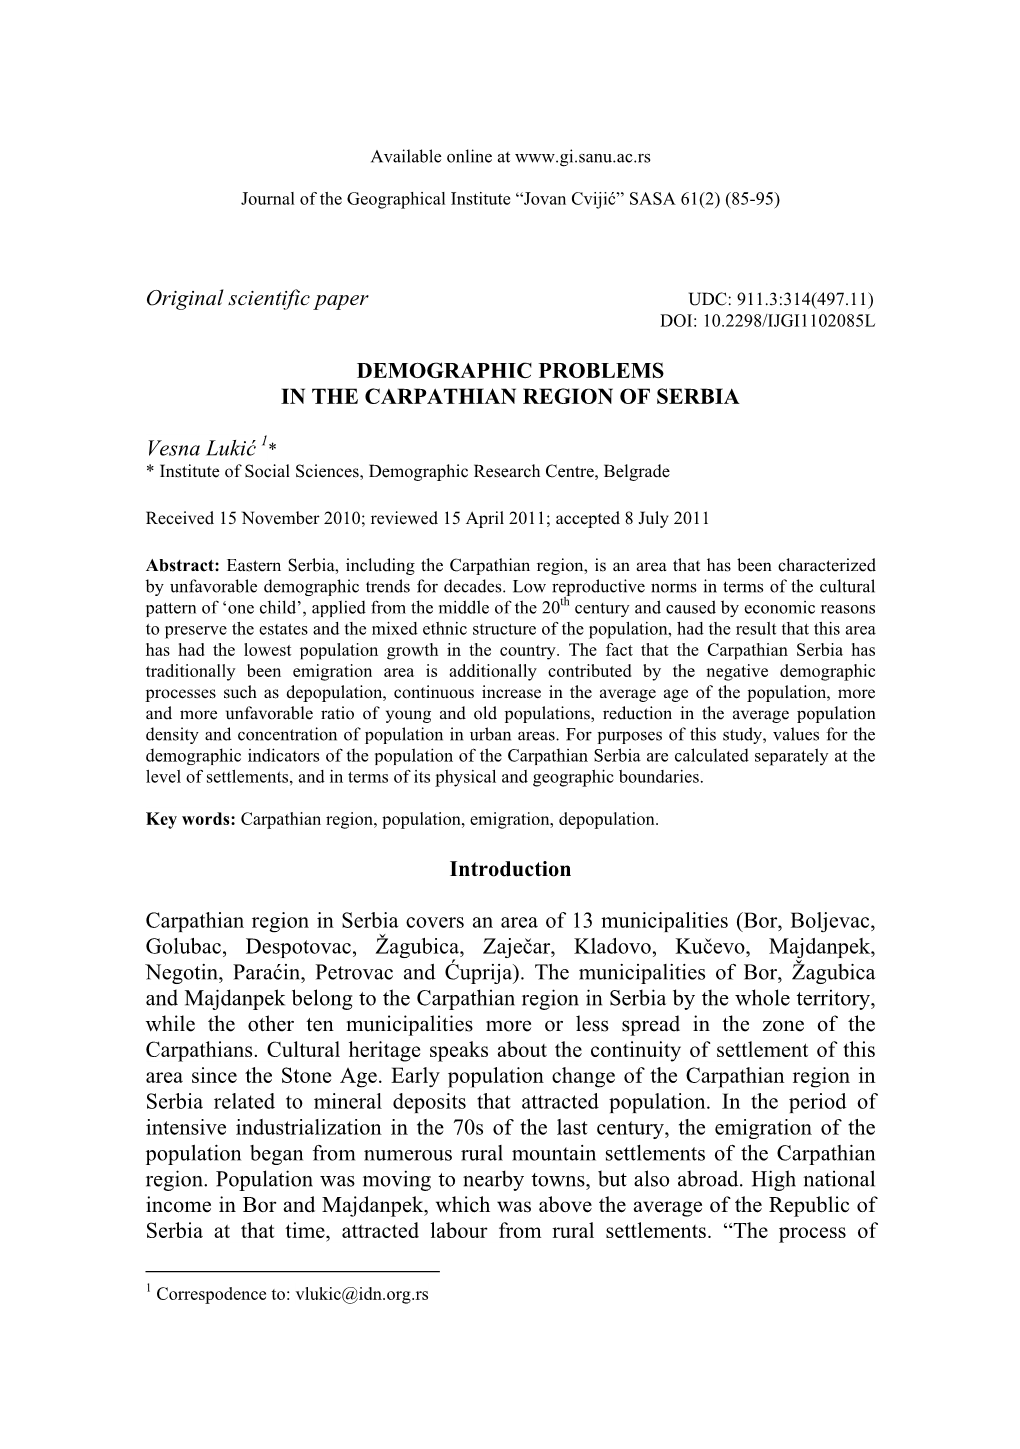 Original Scientific Paper DEMOGRAPHIC PROBLEMS in the CARPATHIAN REGION of SERBIA Vesna Lukić 1 Introduction Carpathian